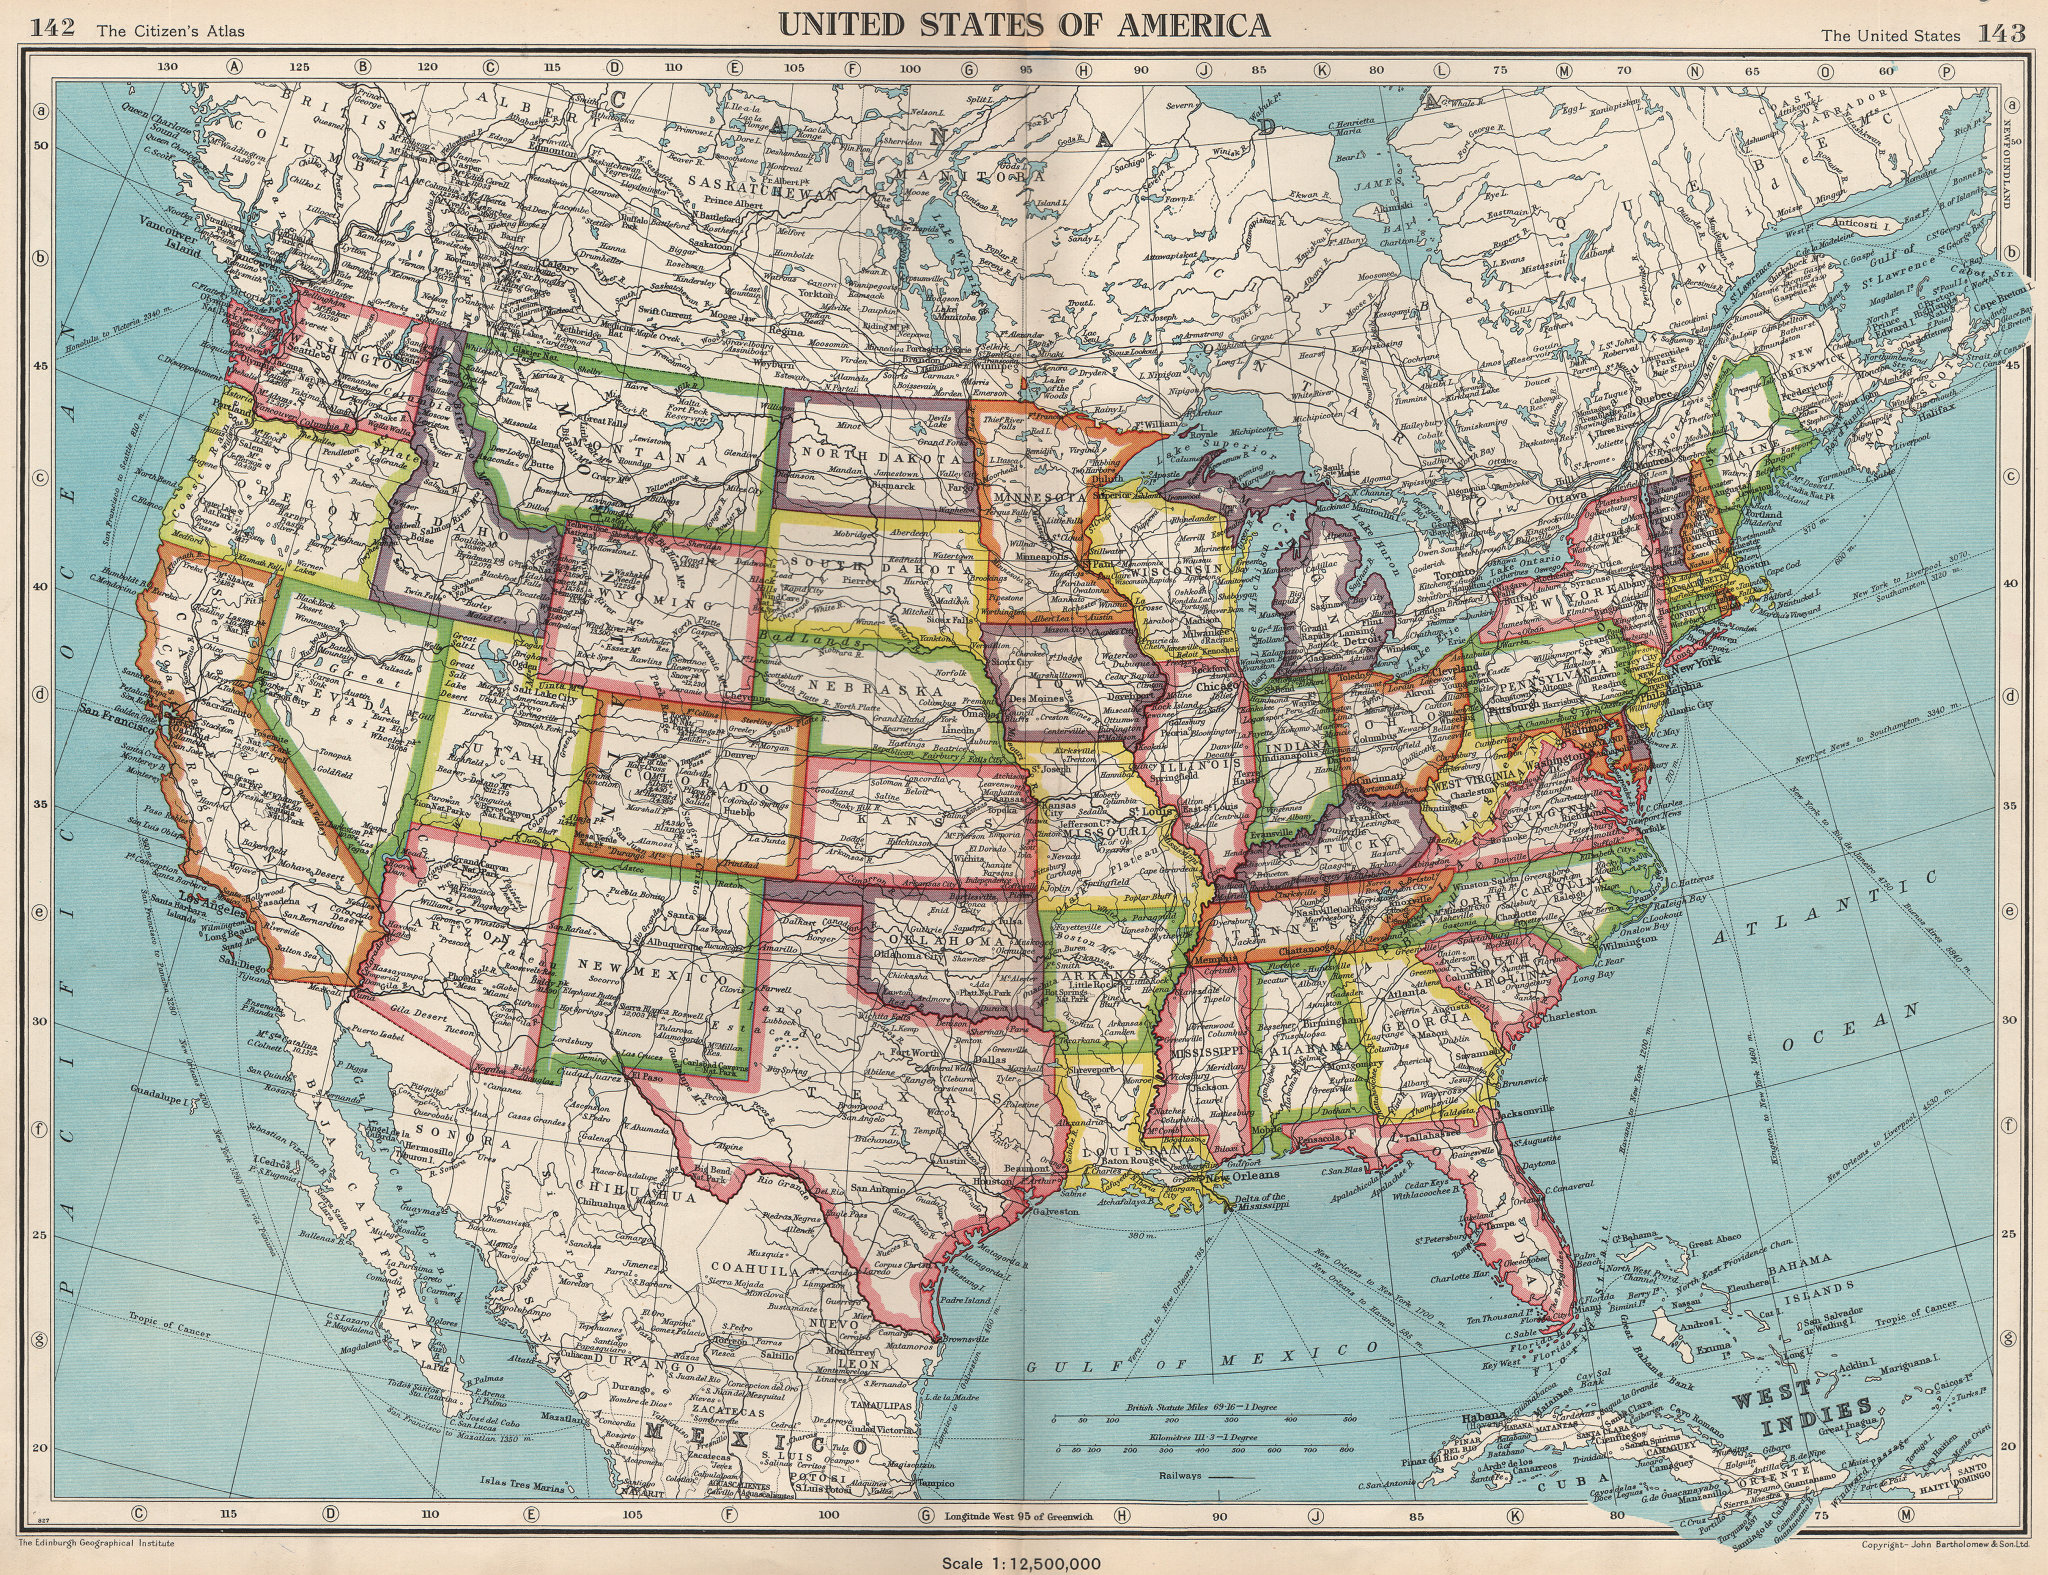 Associate Product USA. United States of America. State map. BARTHOLOMEW 1952 old vintage